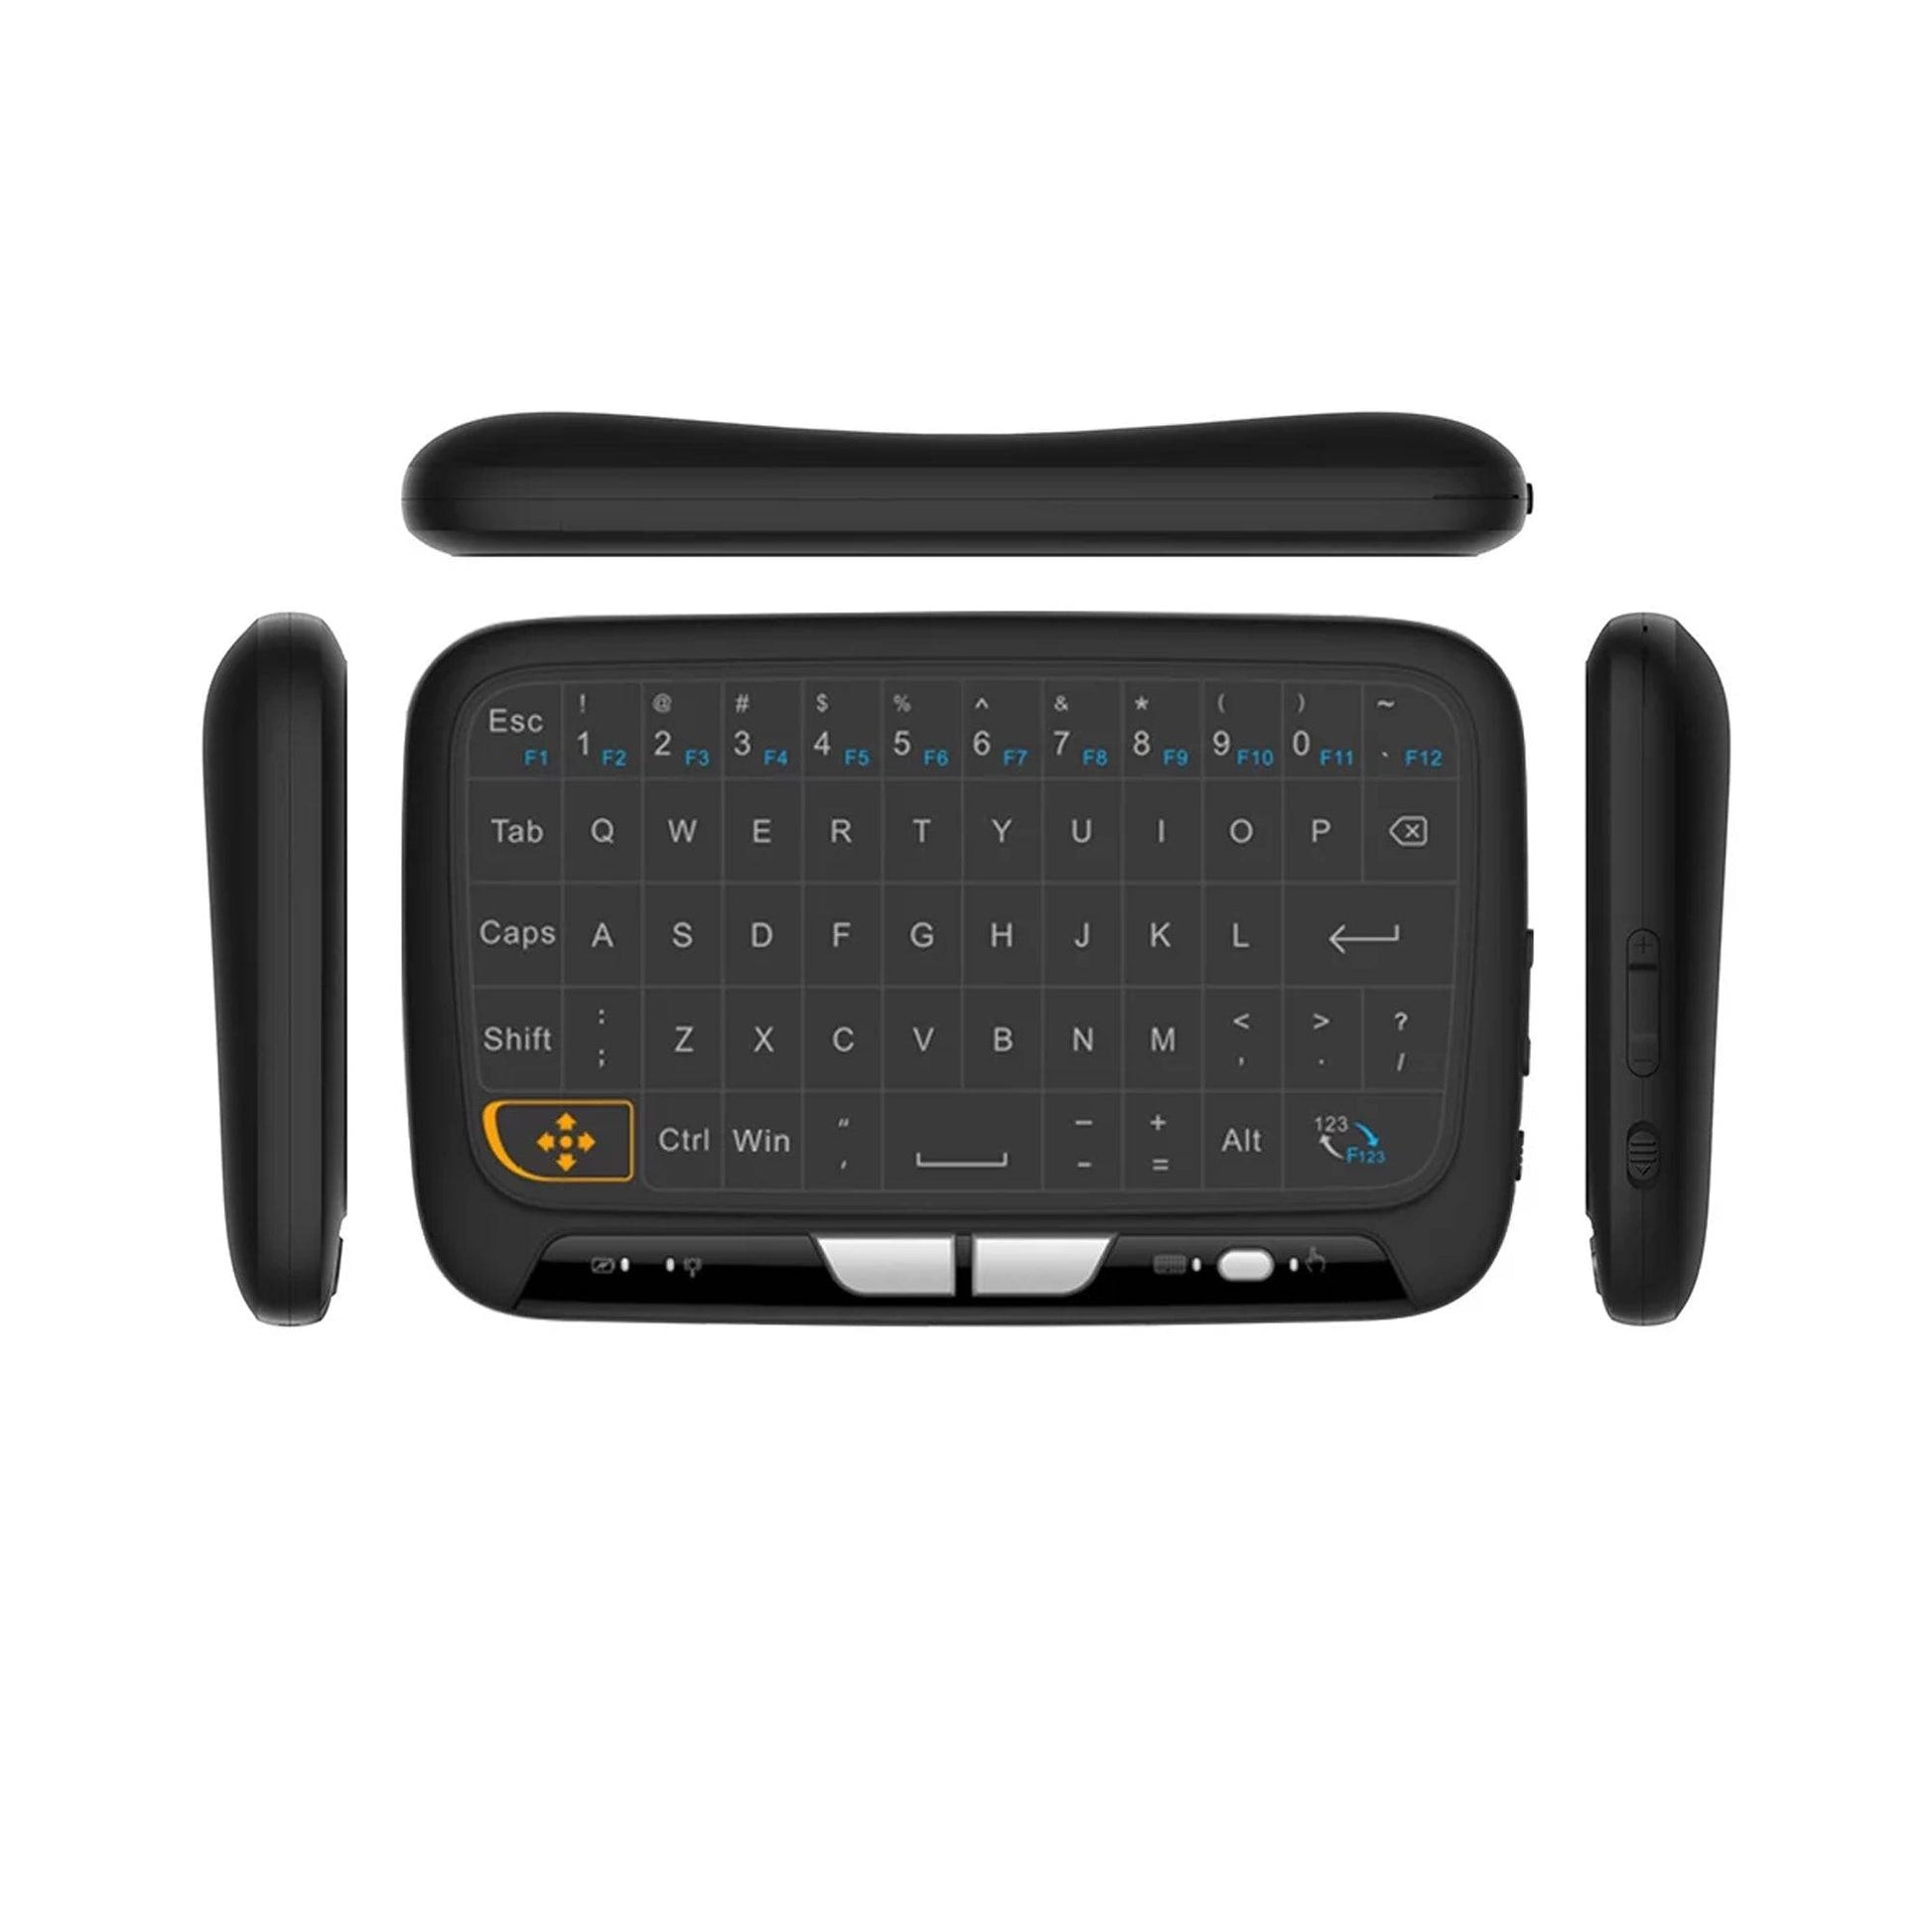 H18 2.4GHz Mini Keyboard Air Mouse QWERTY Keyboard - Black